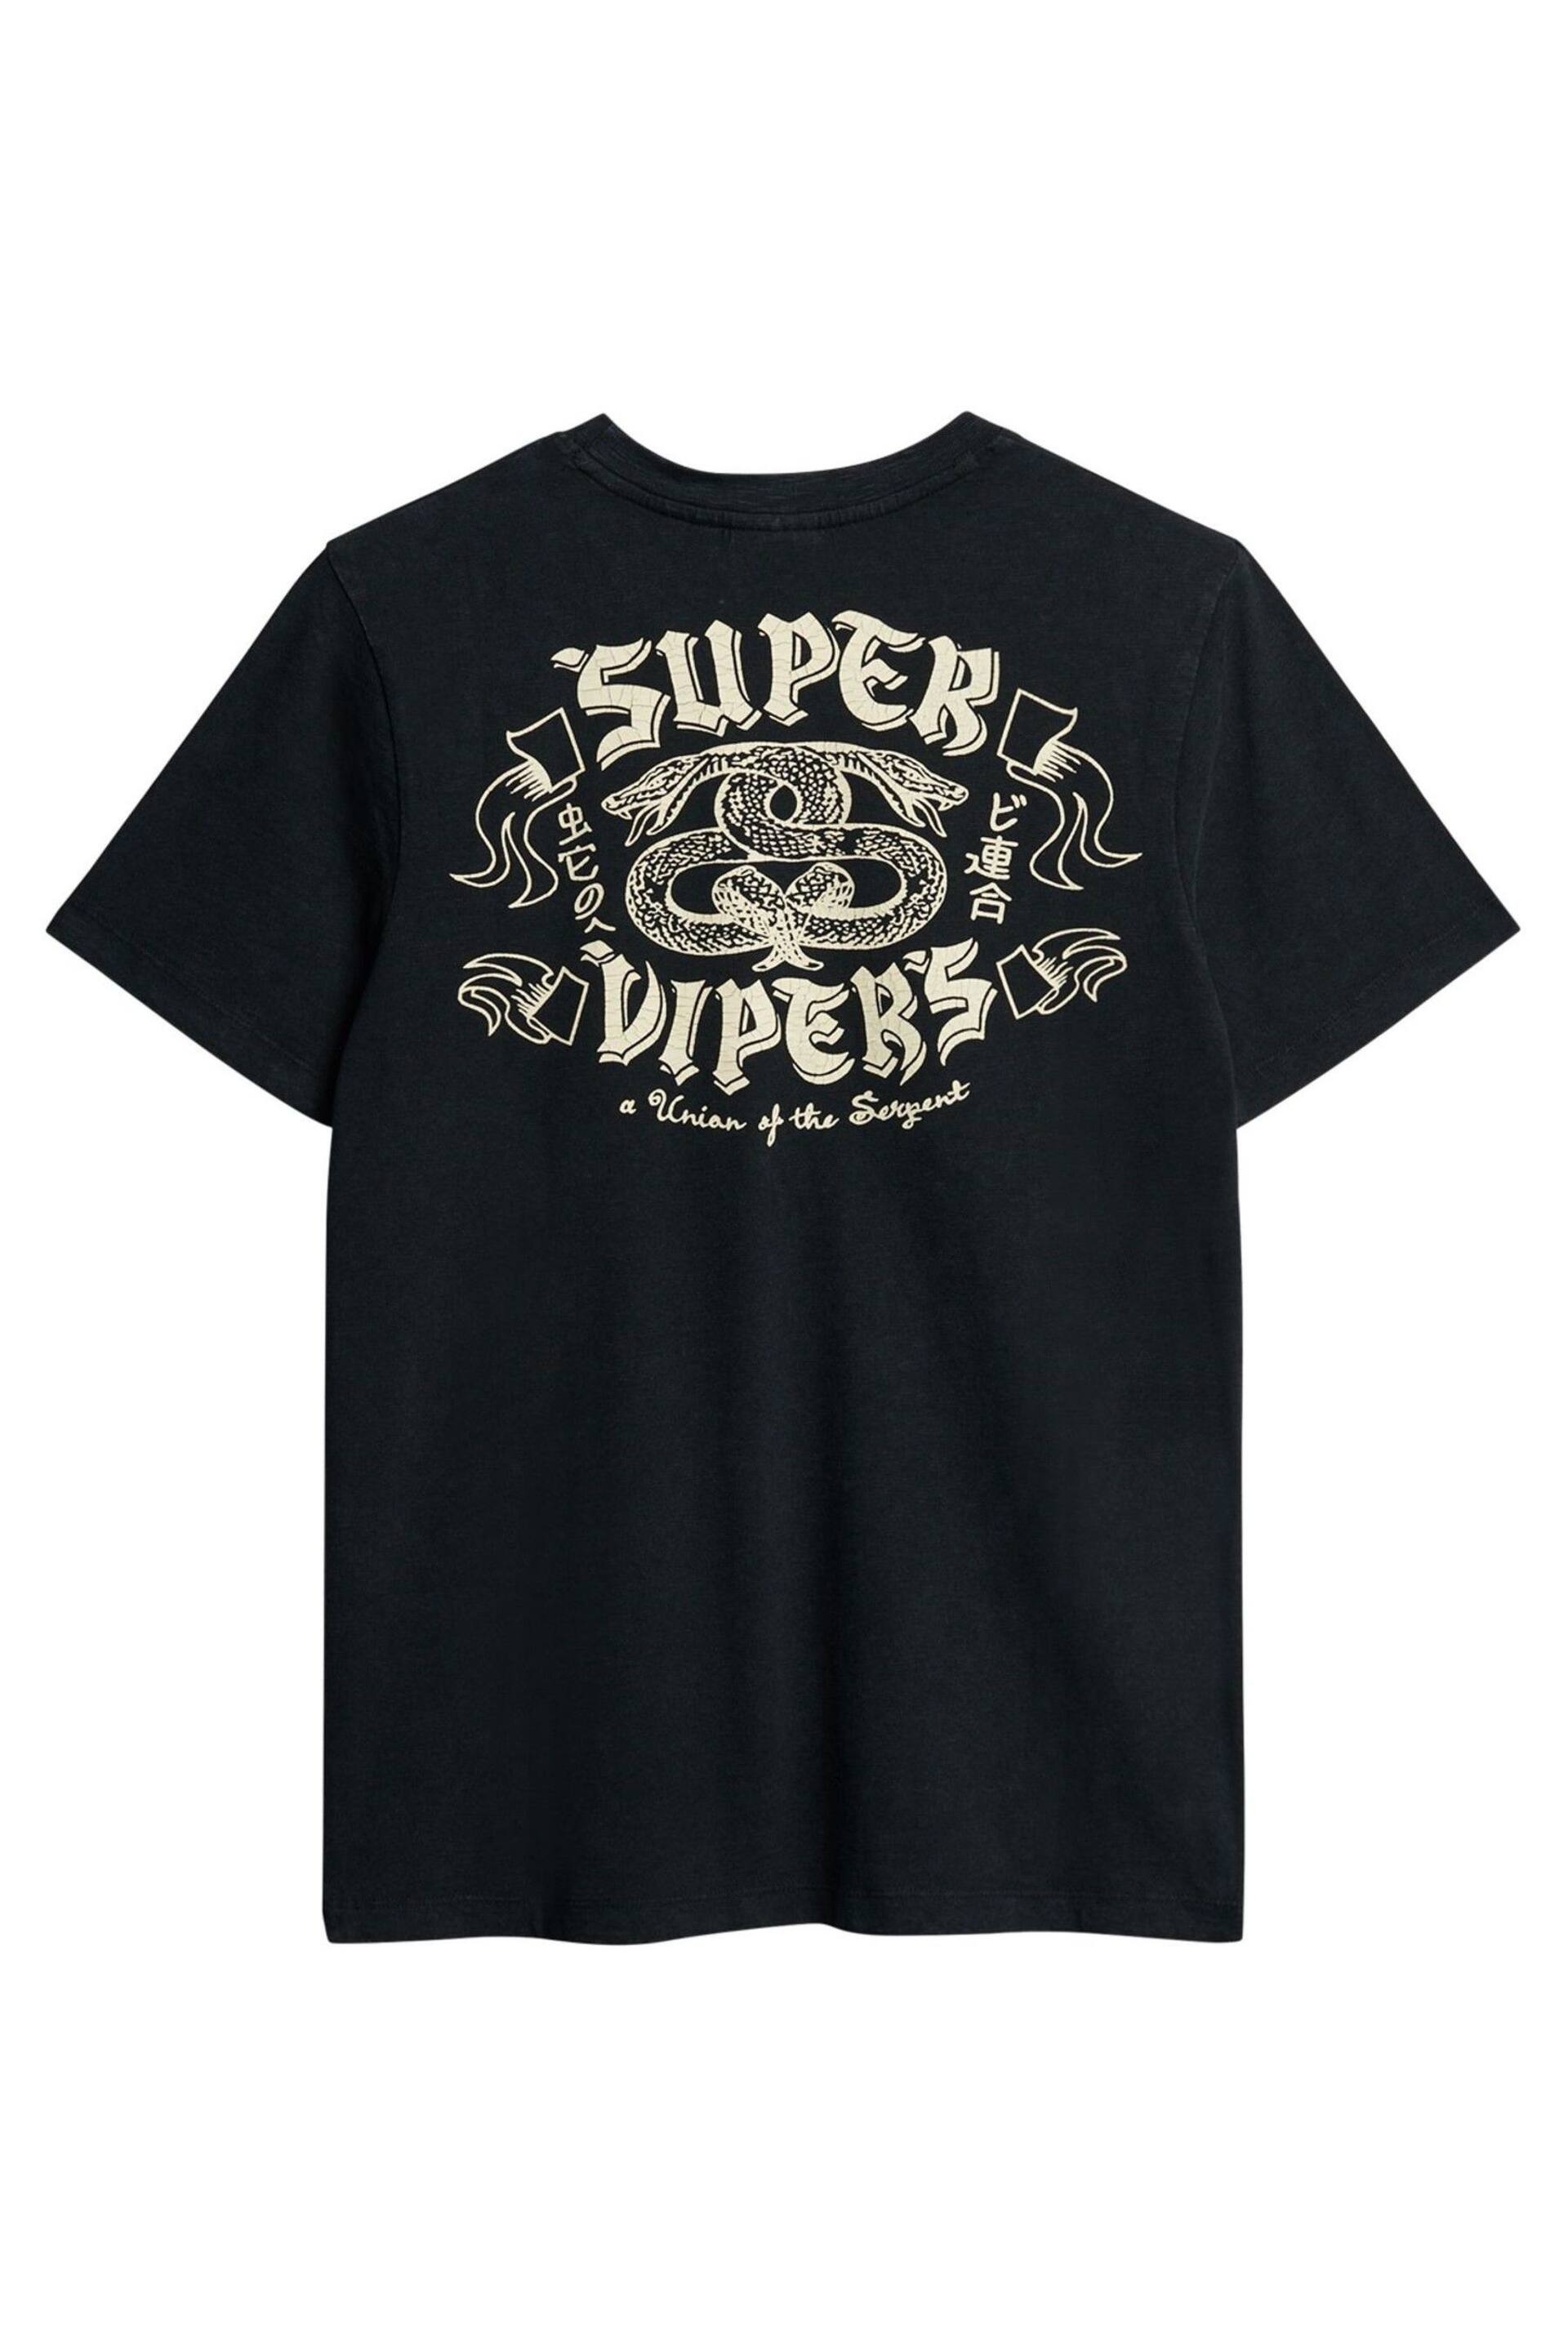 Superdry Black Retro Rocker Graphic T-Shirt - Image 6 of 8